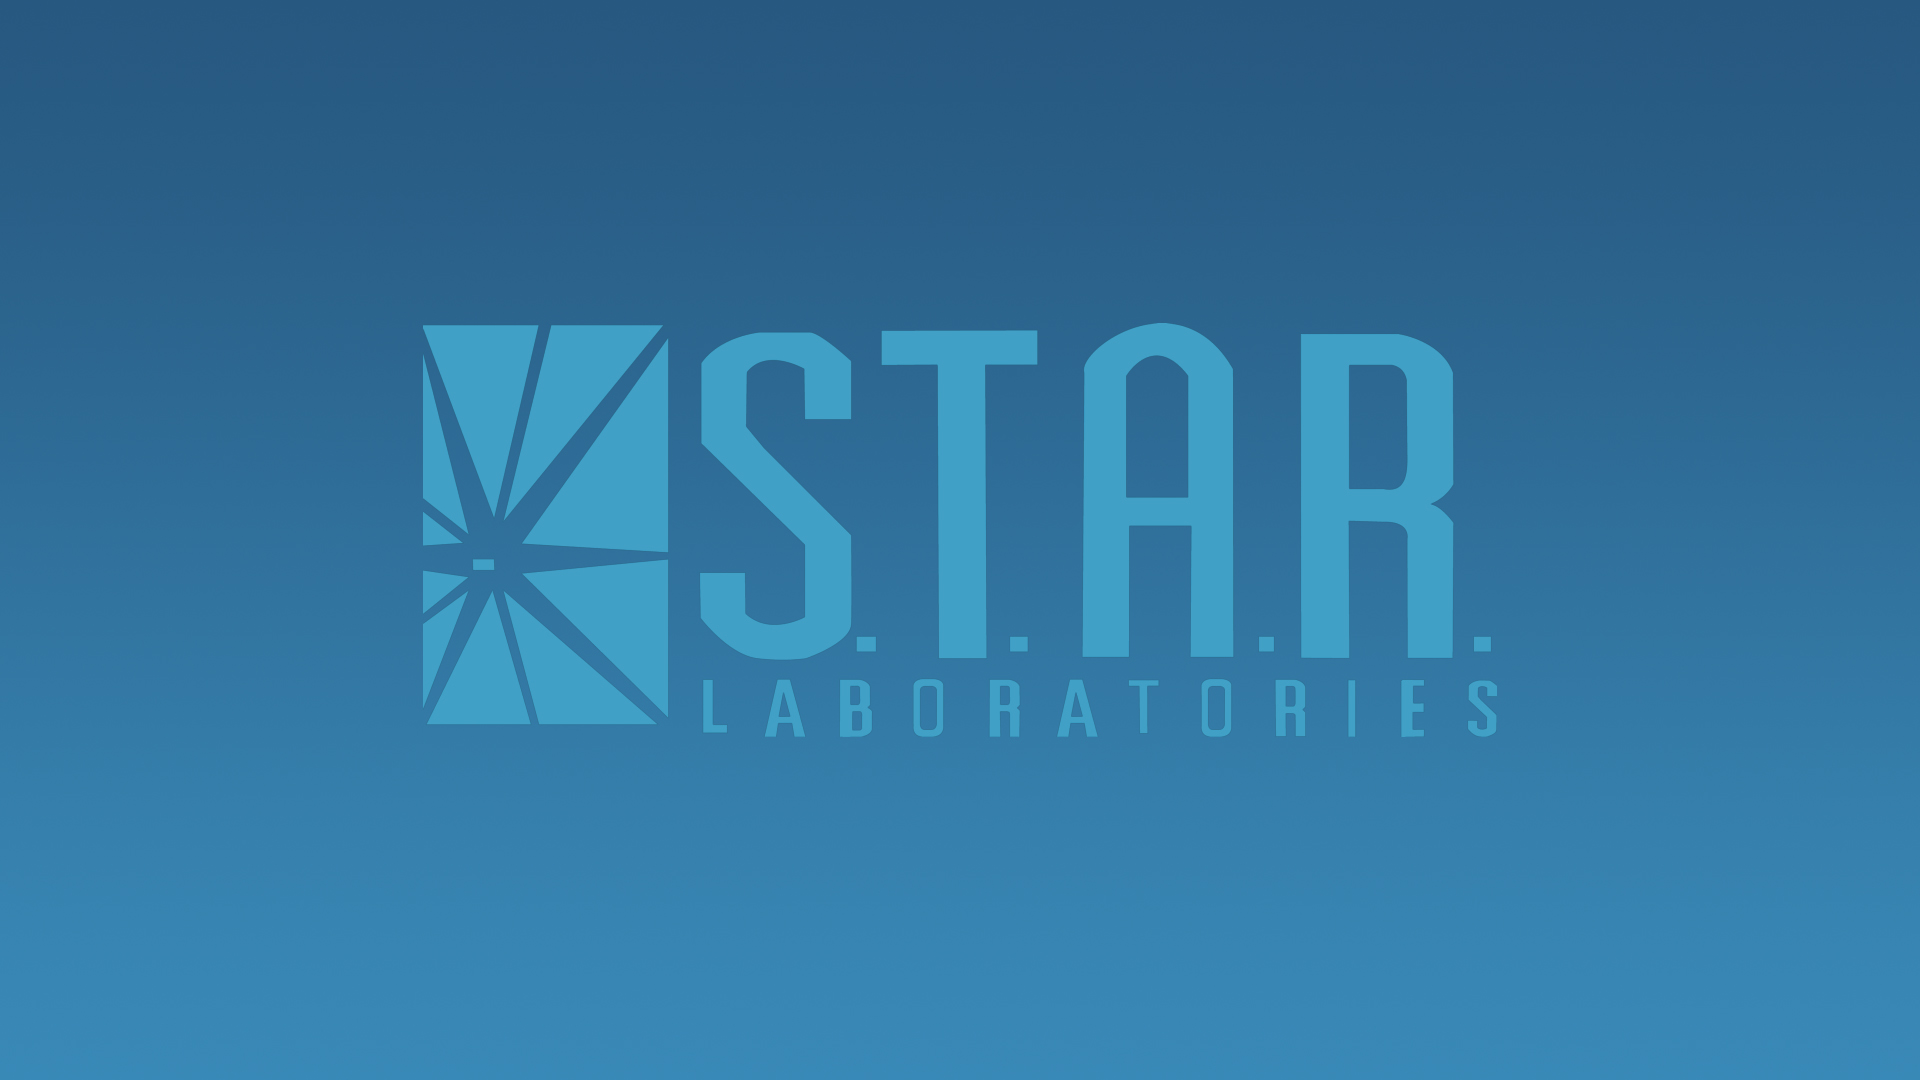 Star labs Logos